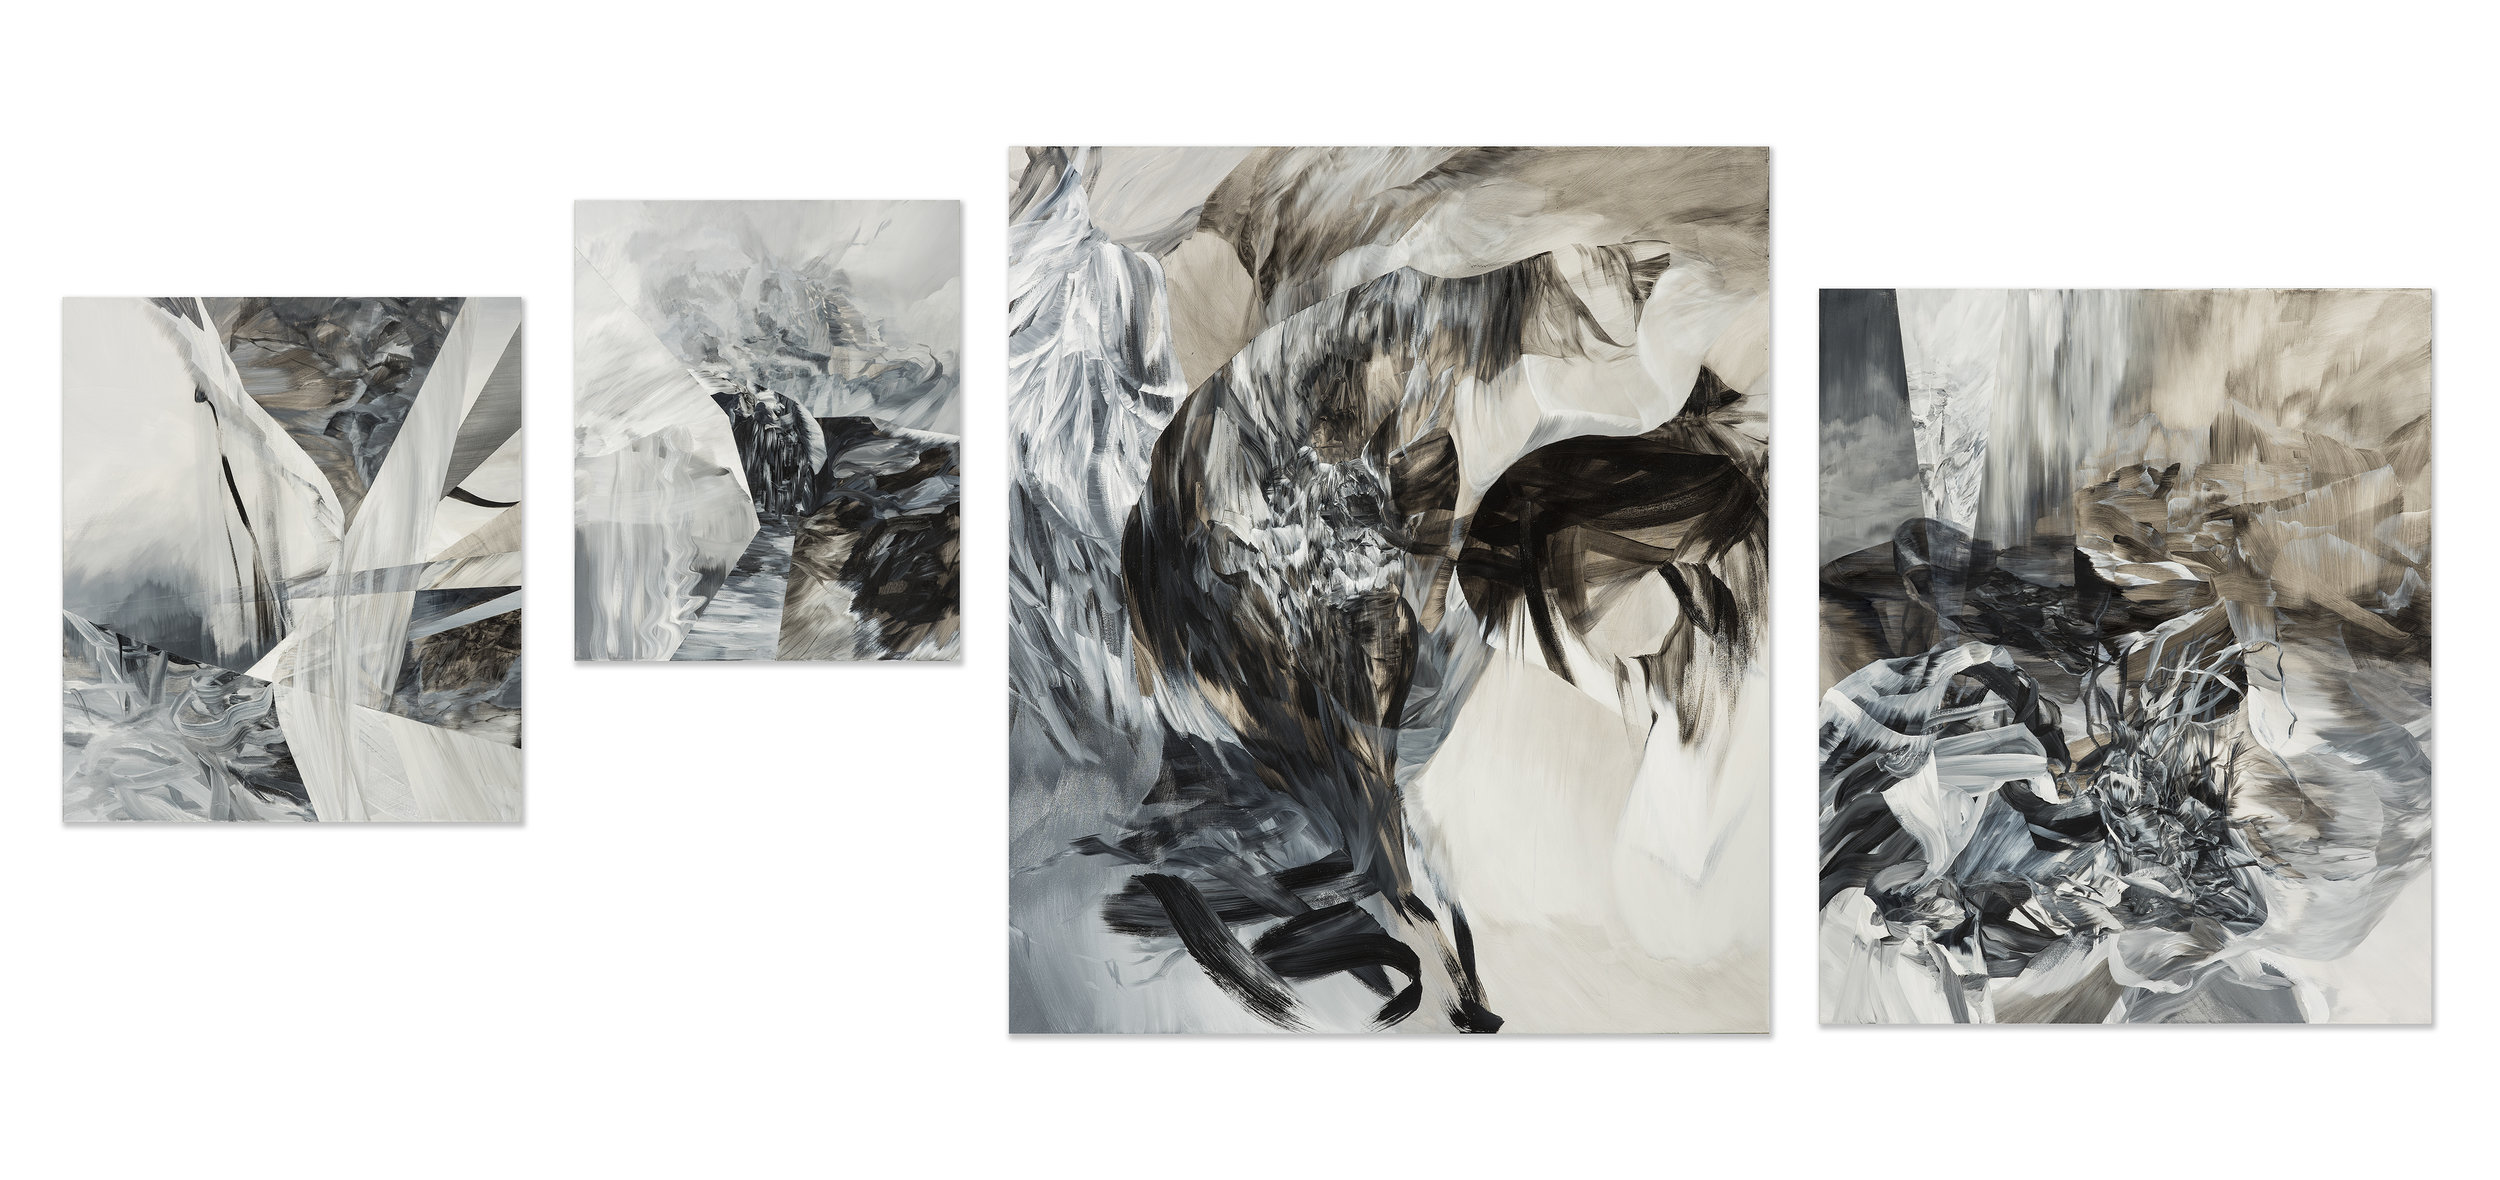   Assembly of Deliriums - Quartet , 2015  acrylic on canvas  84" x 216 